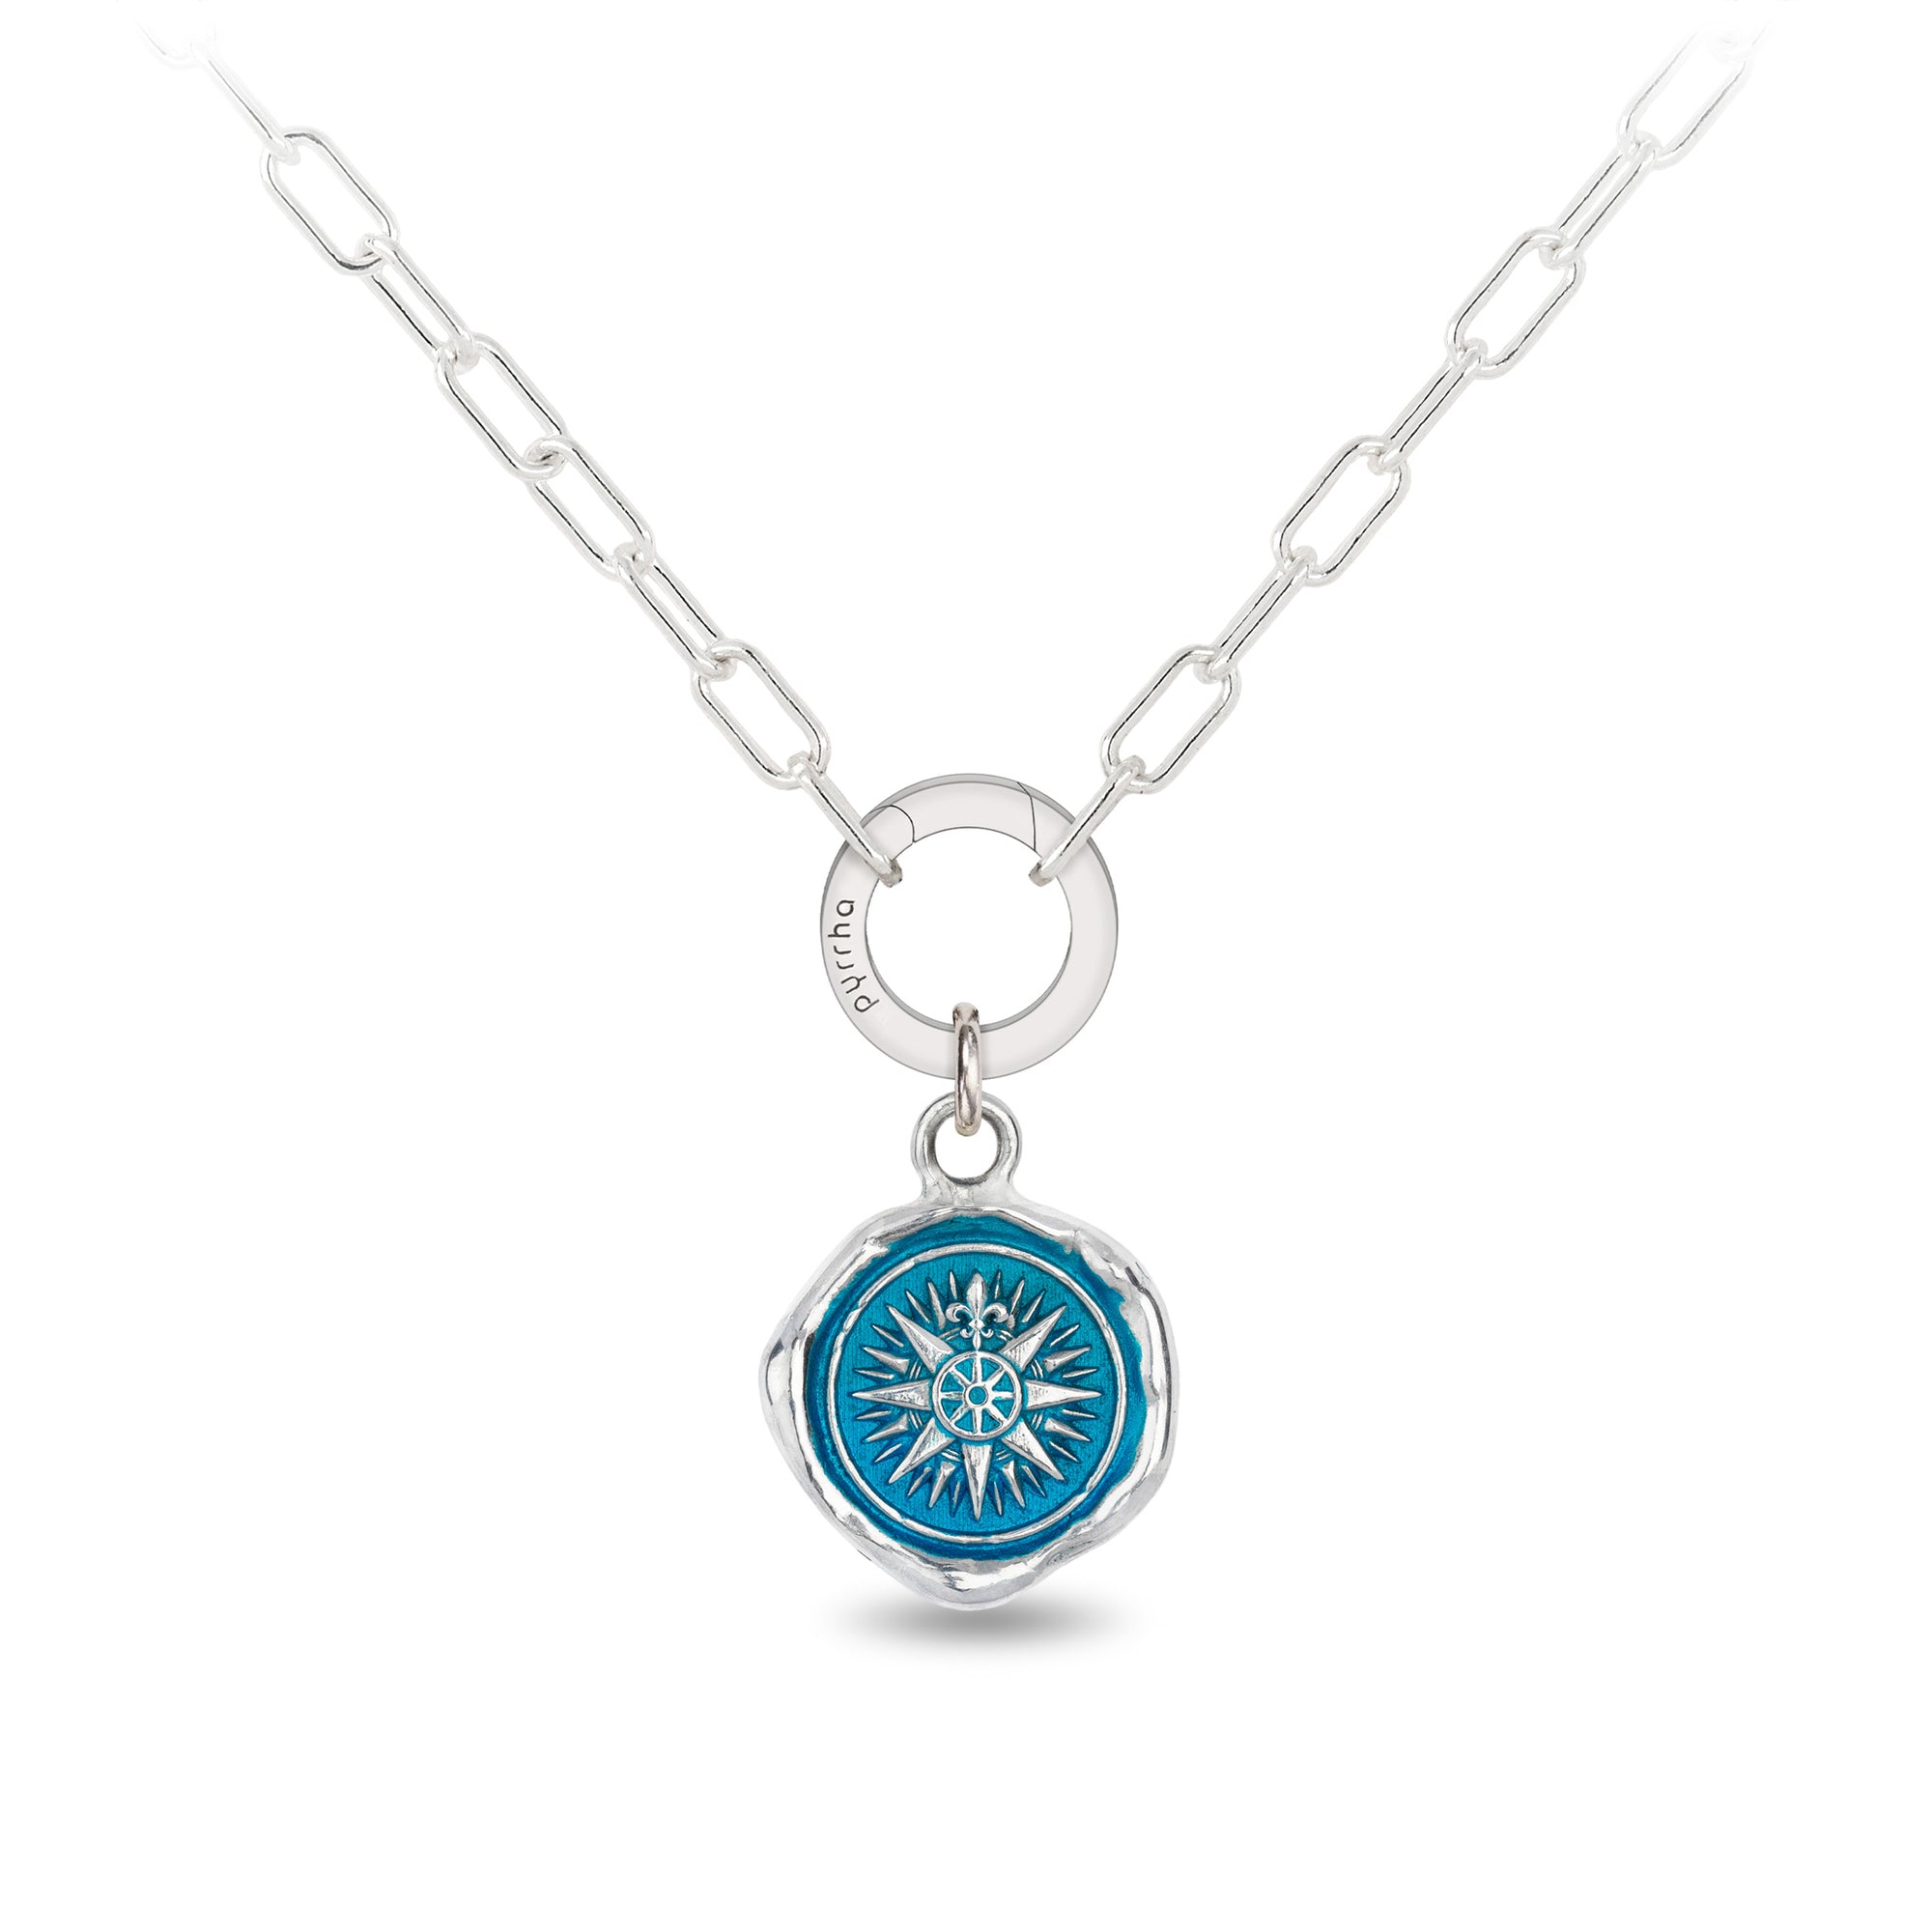 Direction Small Paperclip Chain Necklace - Capri Blue